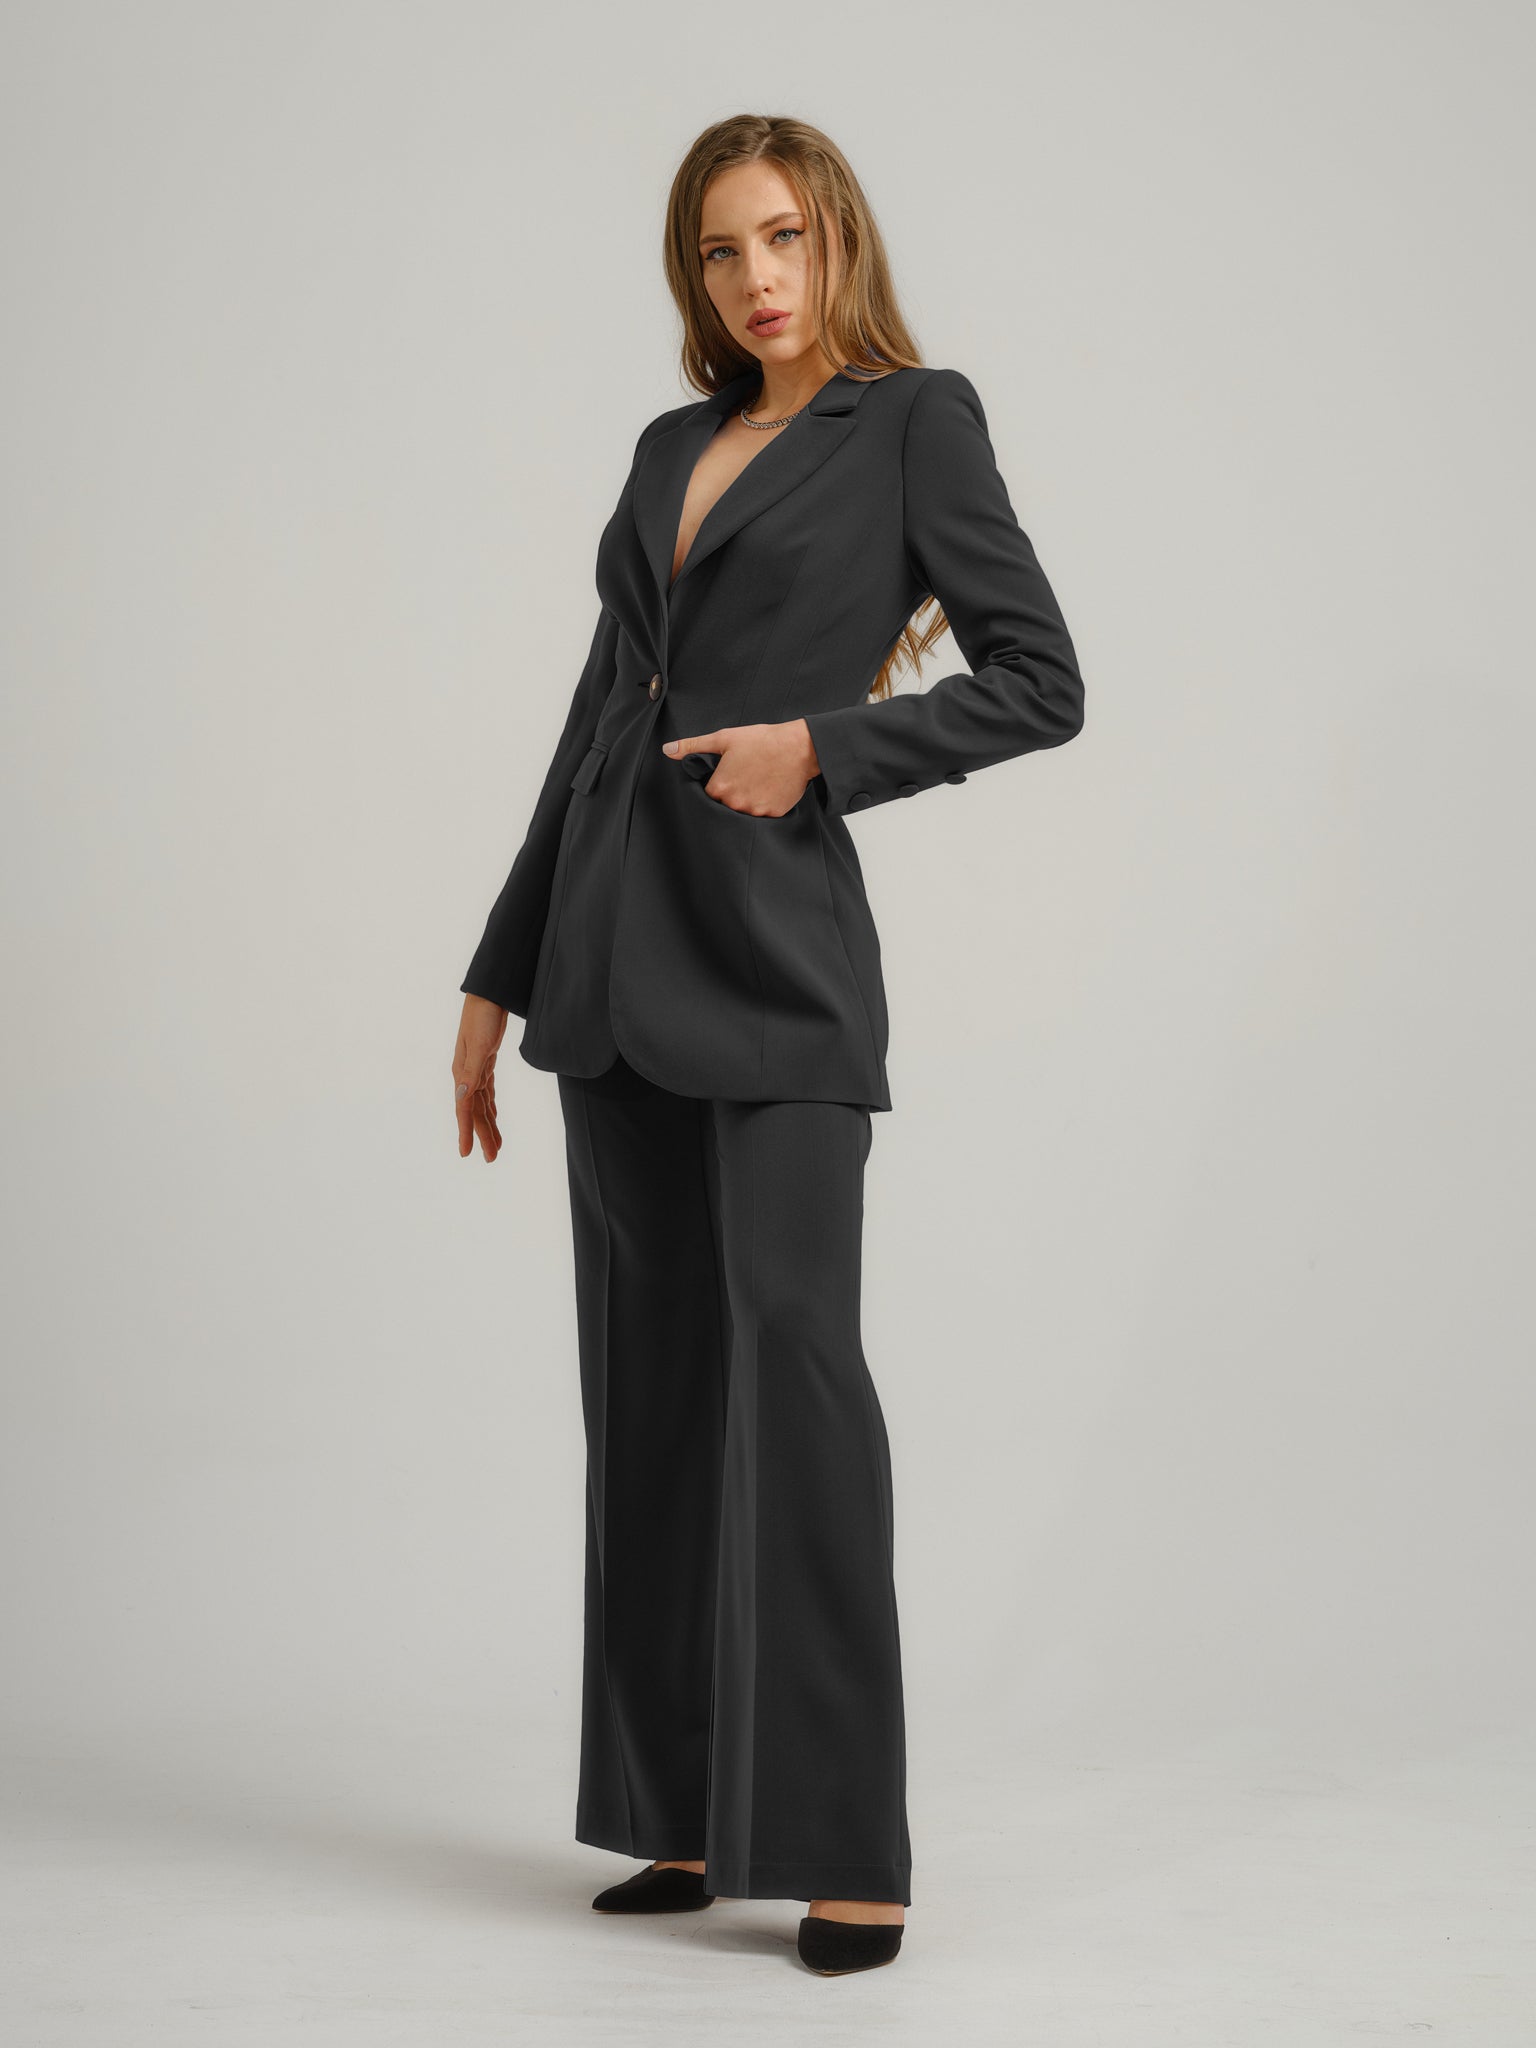 Magnetic Power Timeless Classic Blazer by Tia Dorraine Women's Luxury Fashion Designer Clothing Brand